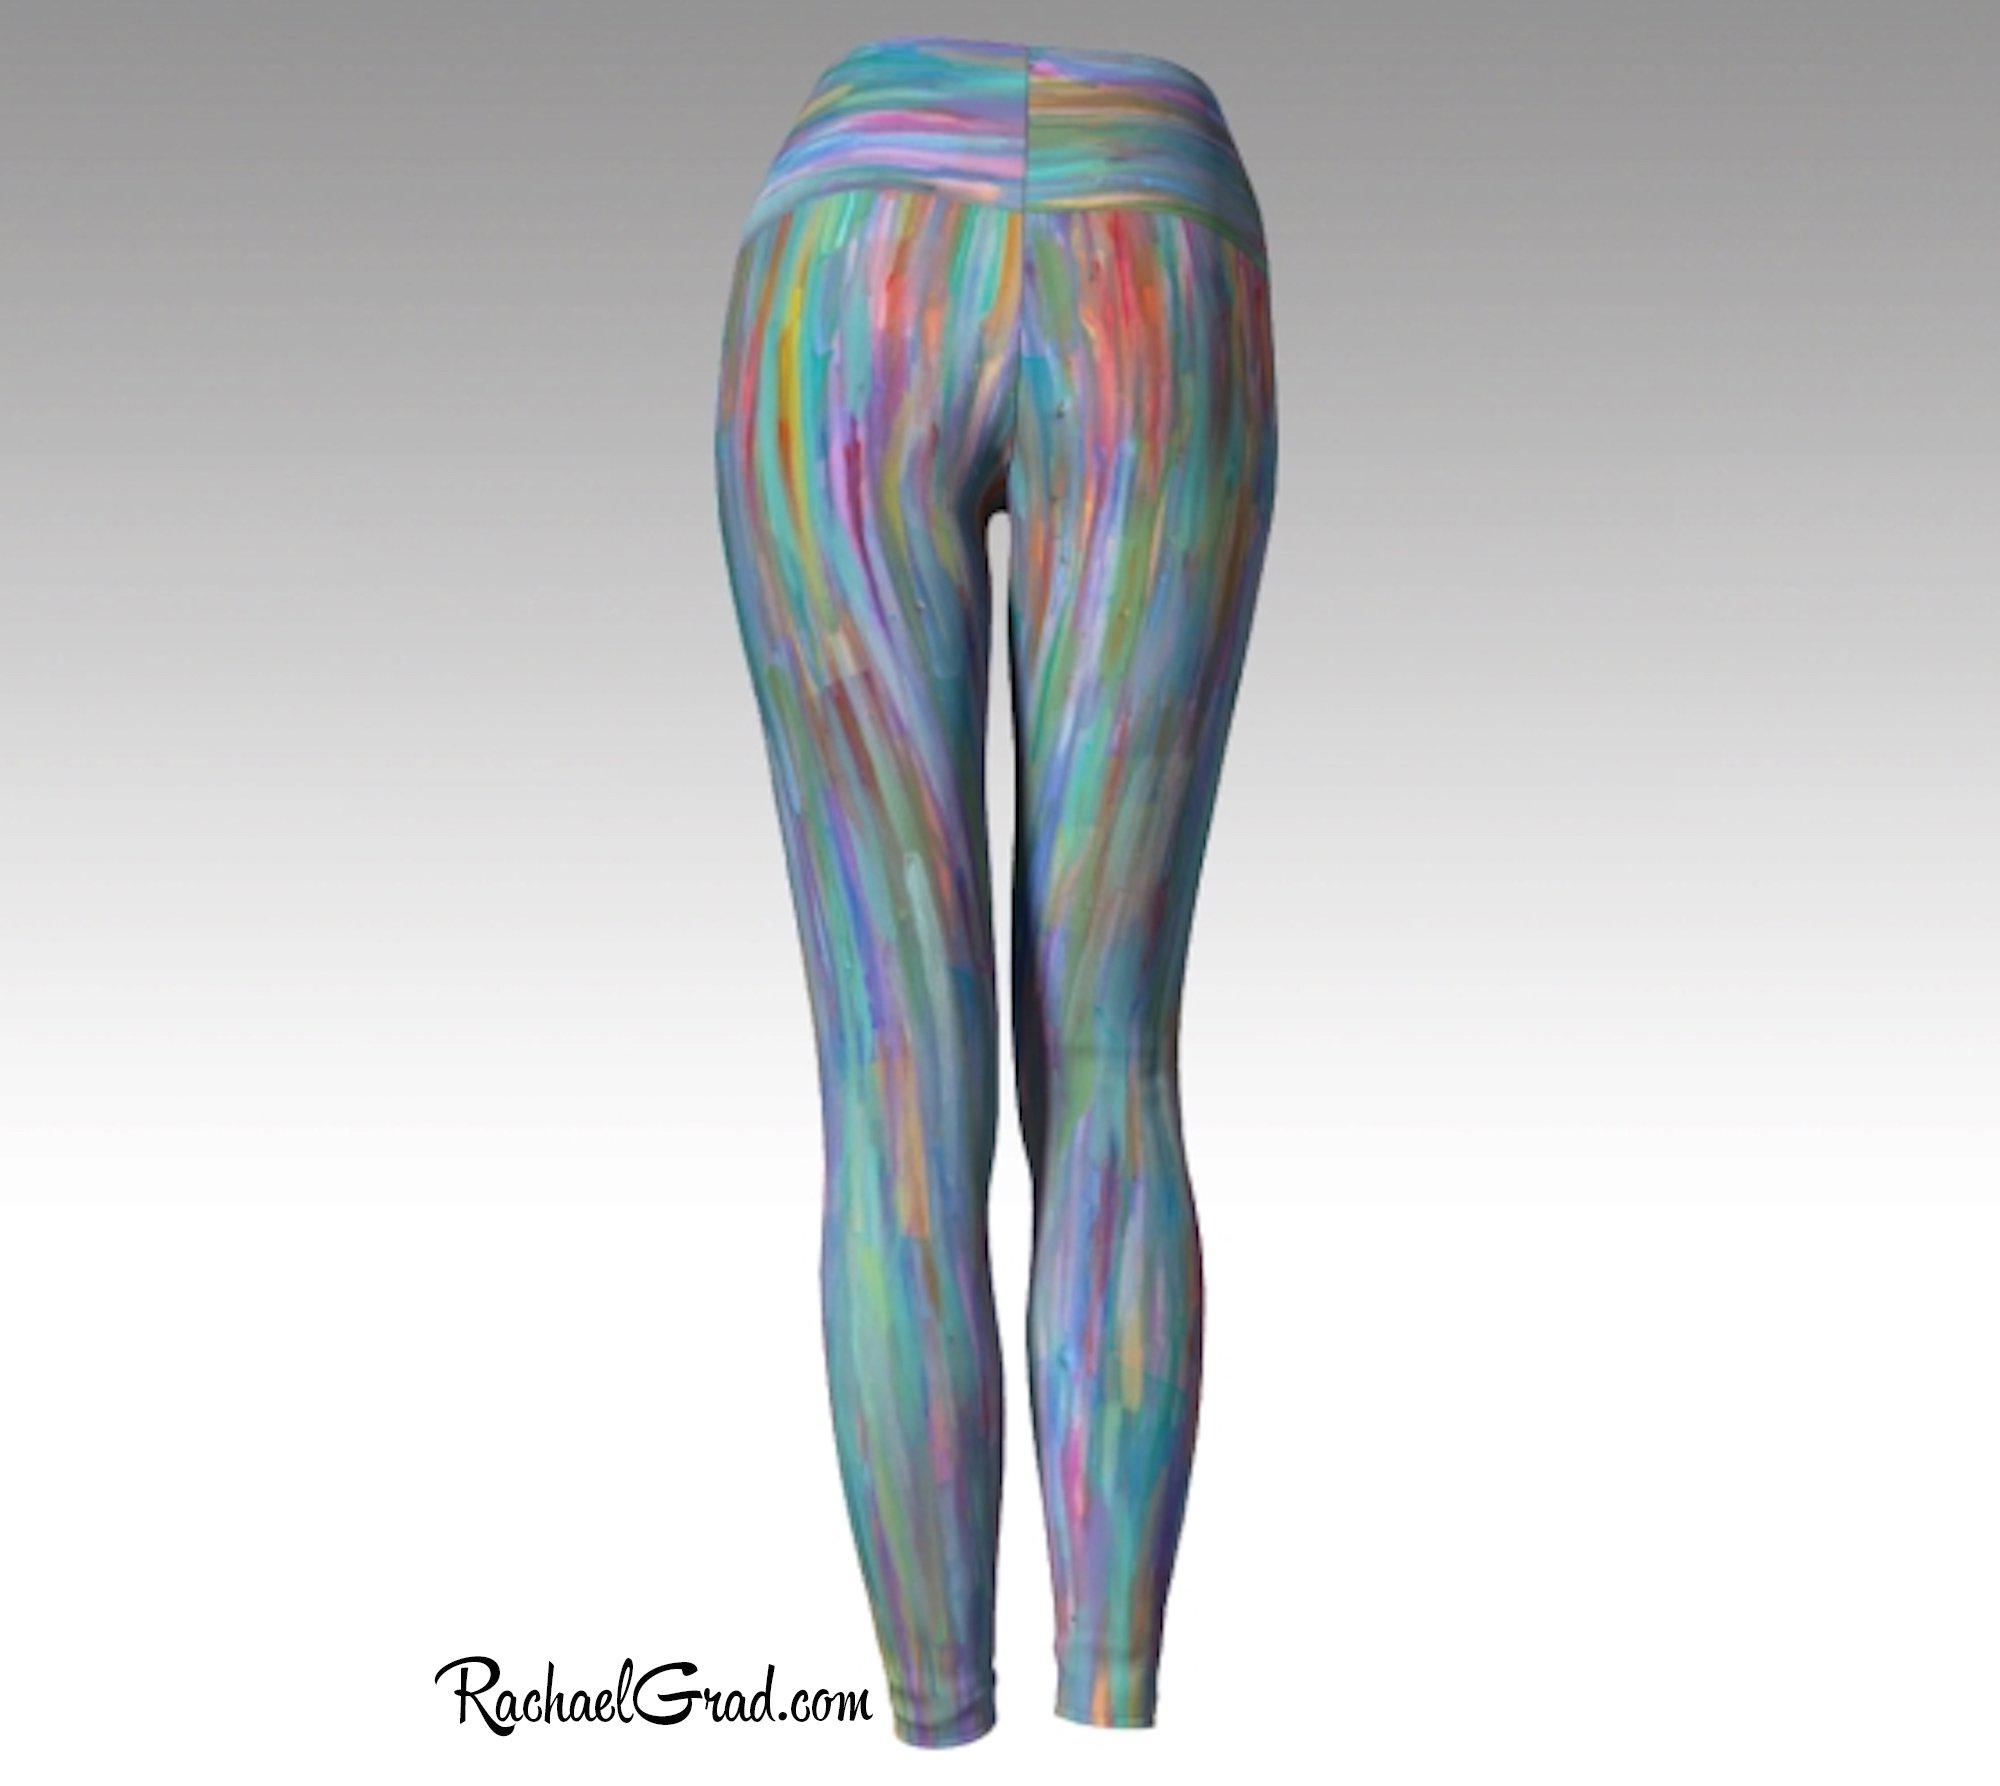 Turquoise Yoga Leggings, Colorful Art Tights by Artist Rachael Grad